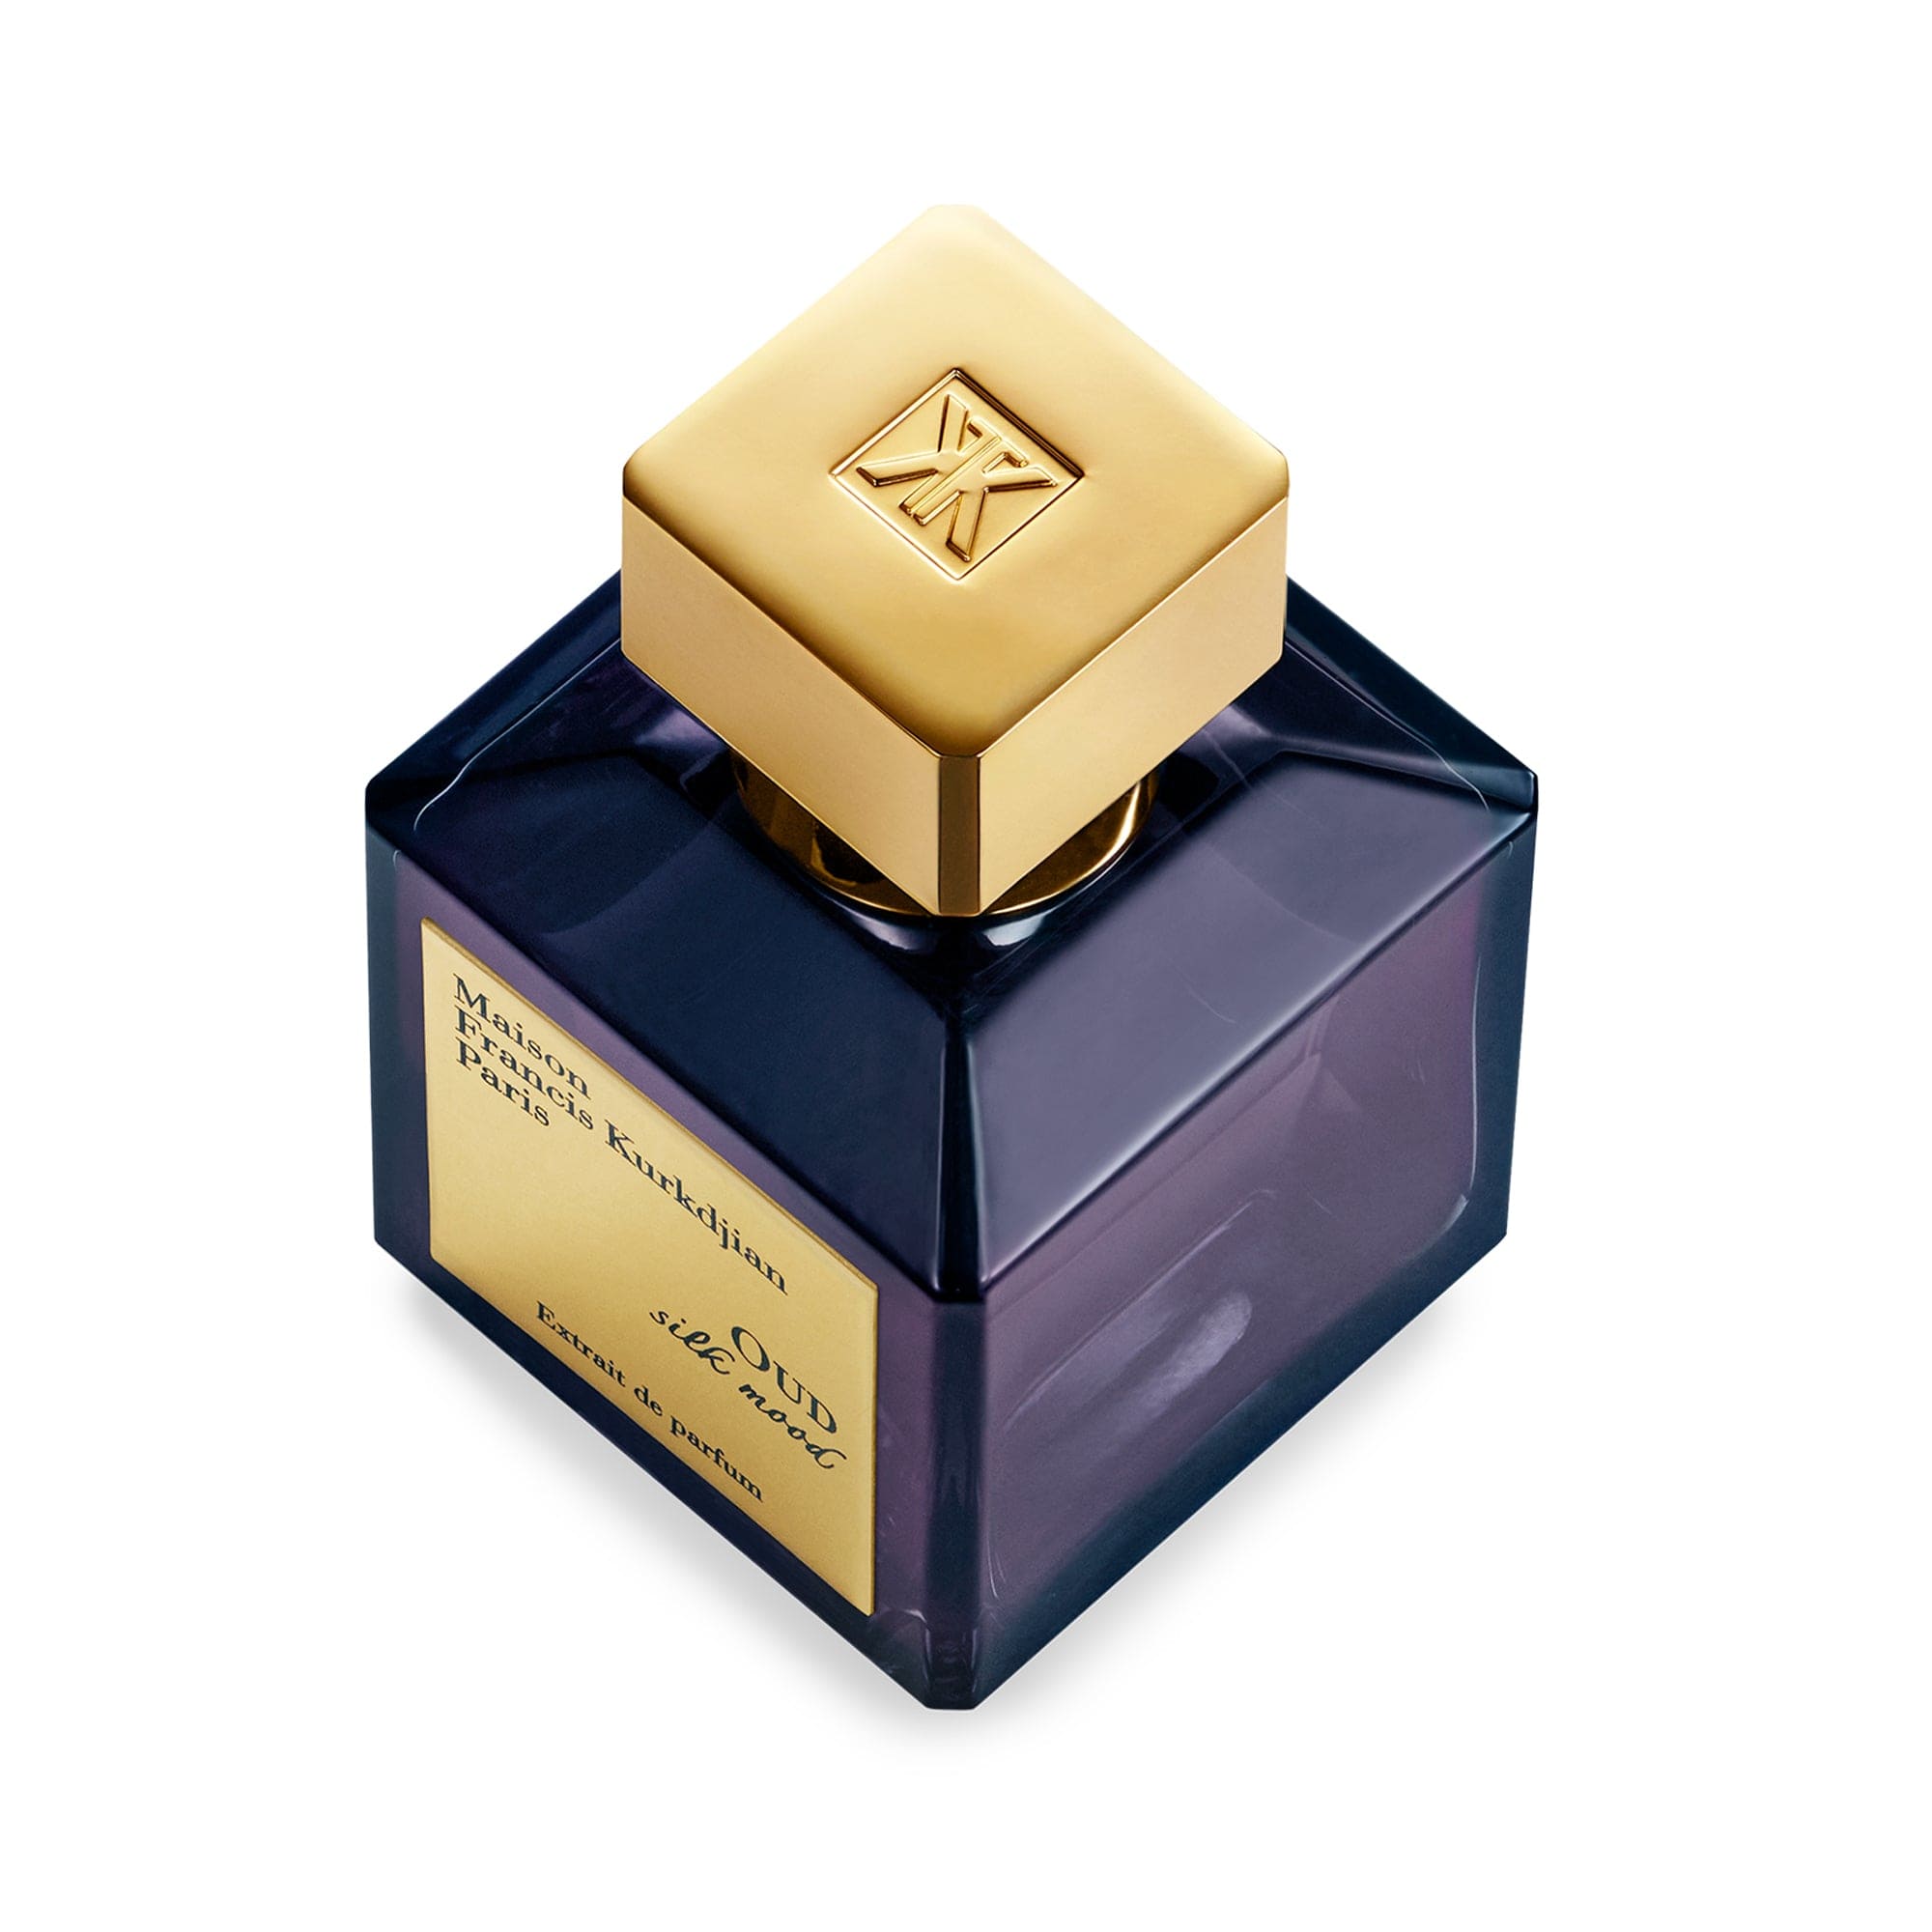 OUD Silk Mood de Maison Francis Kurkdjian Extracto de Perfume